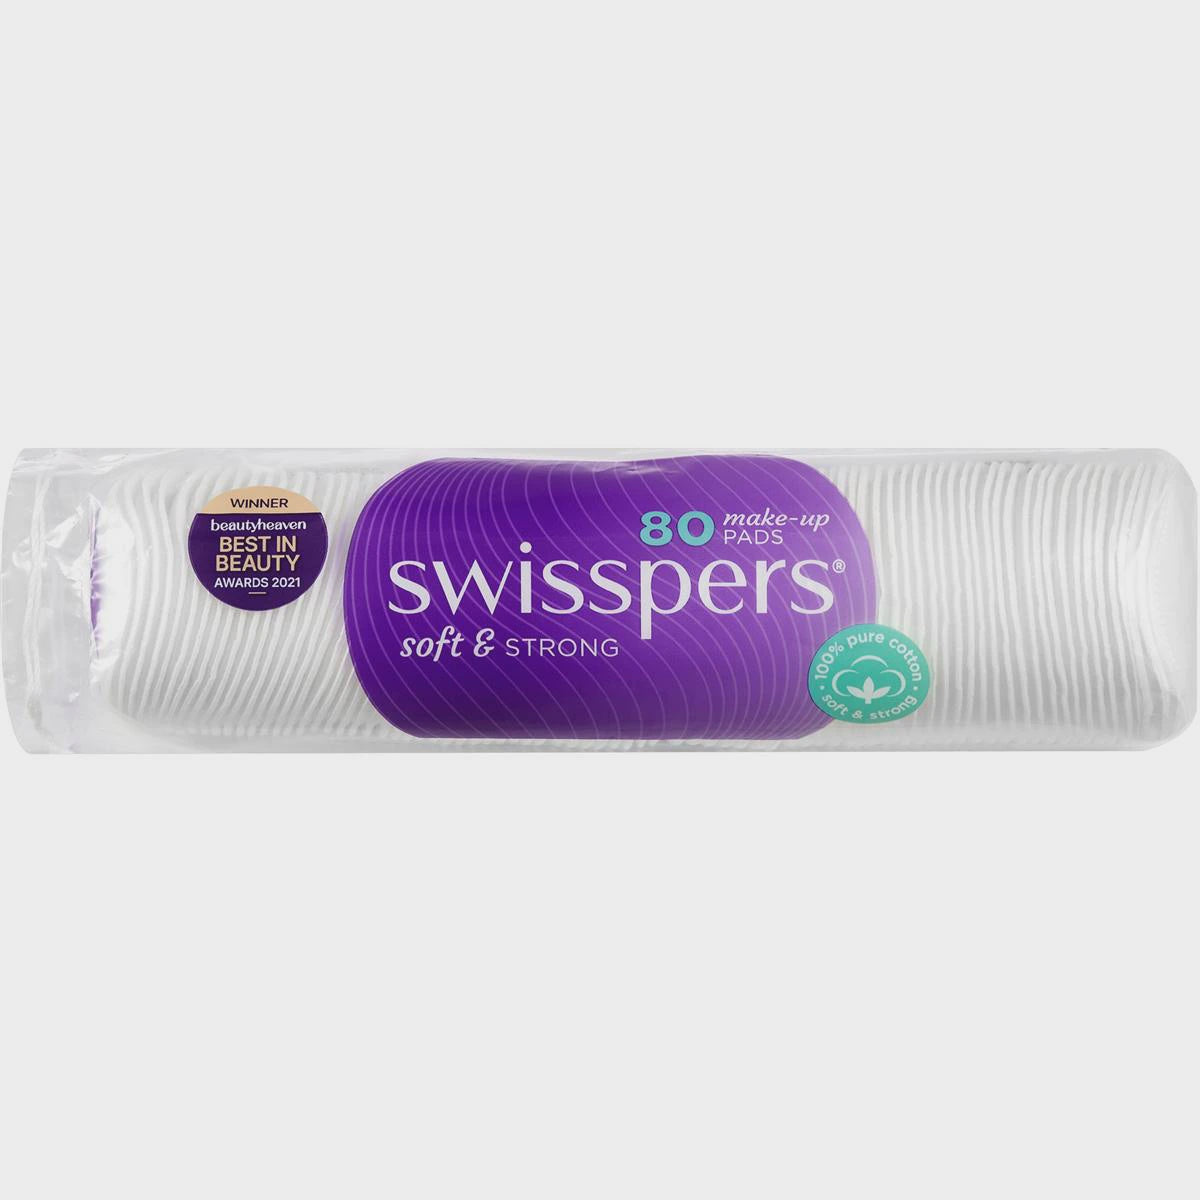 Swisspers Cotton Pads Make Up 80pk